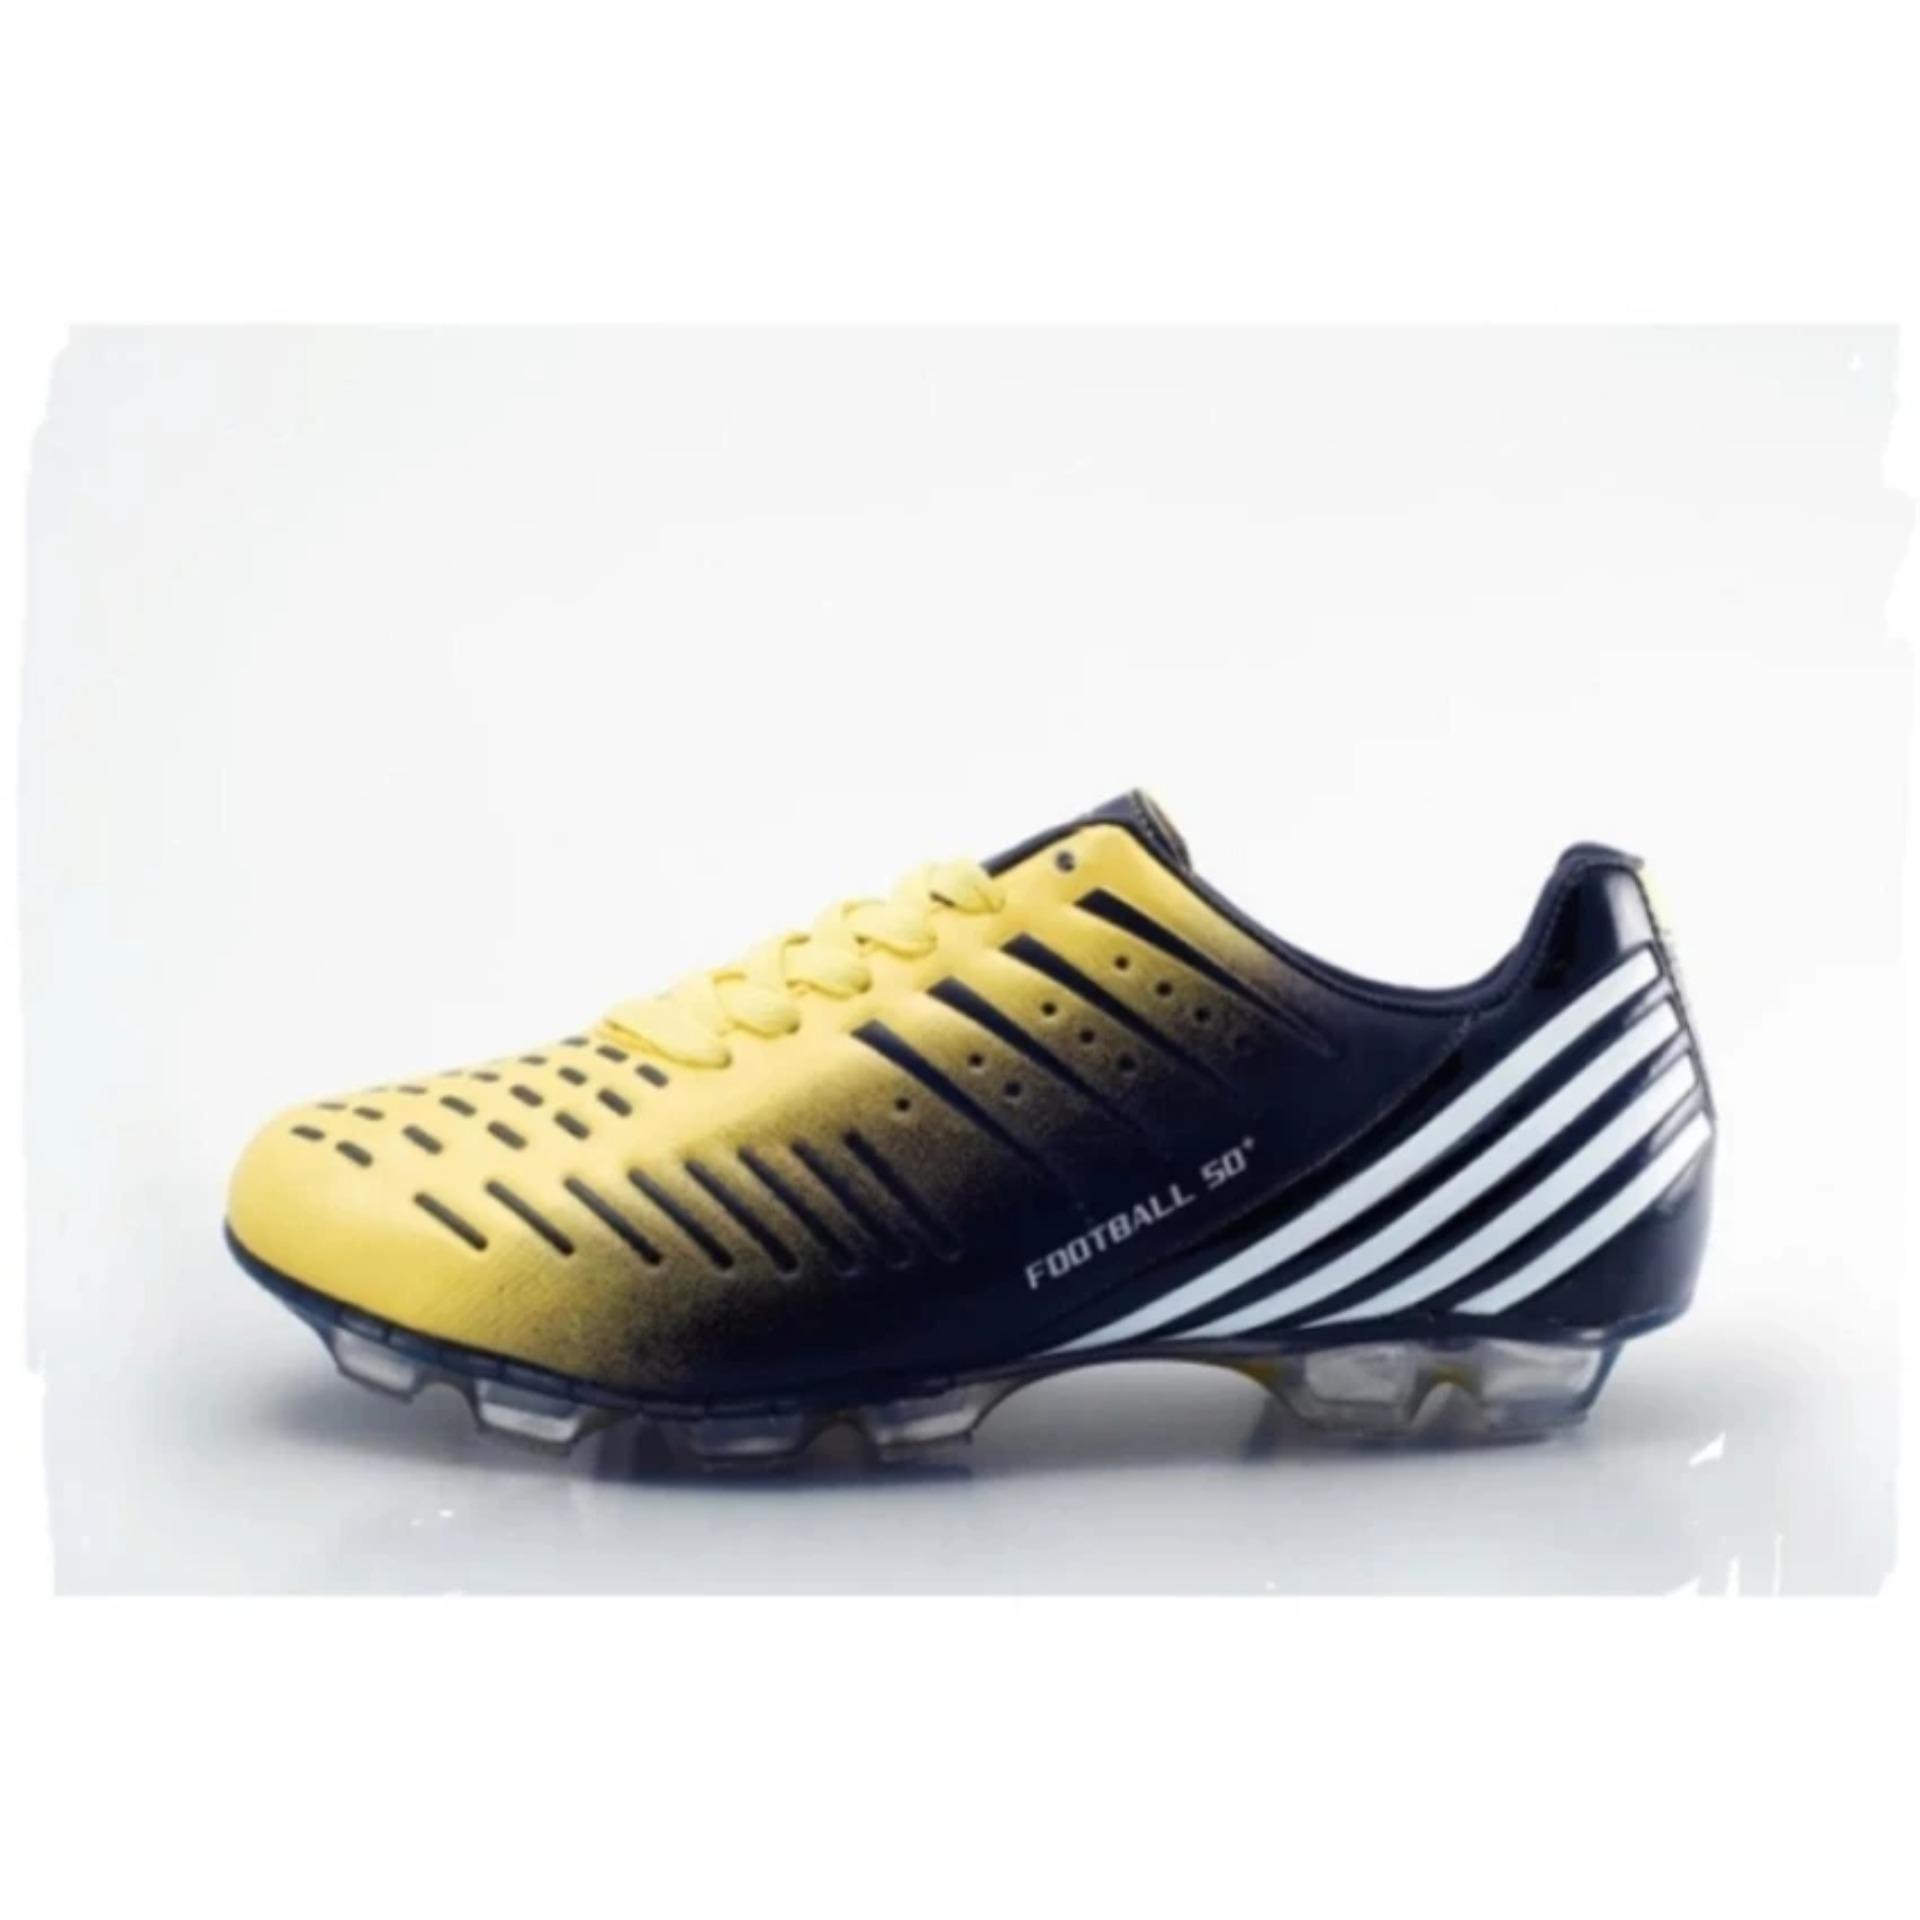 Kasogi Pirlo Soccer Sepatu Bola - Sepatu Sepak Bola - Sepatu Bola Dewasa - Sepatu Bola Pria - Black Yellow